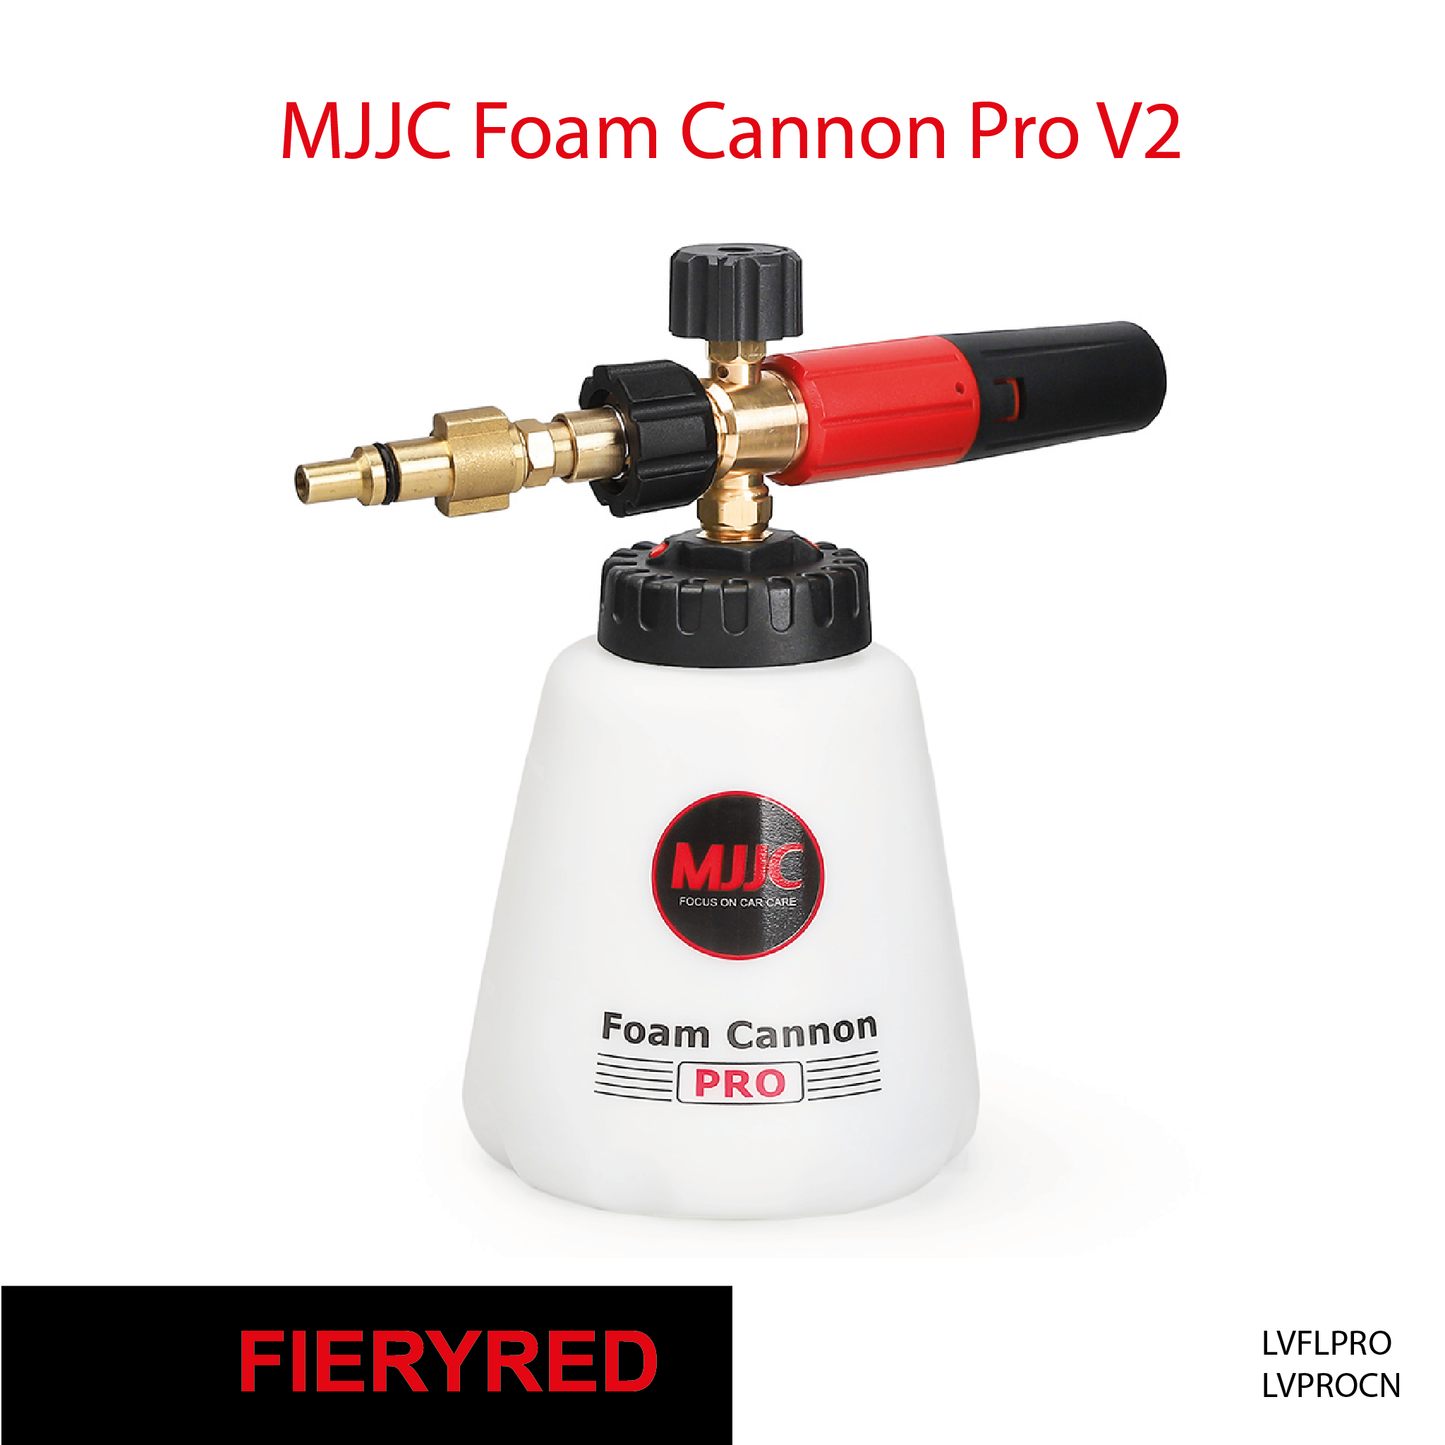 Fieryred pressure washer - MJJC Foam Cannon Pro V2 (Pressure Washer Snow Foam Lance Gun)